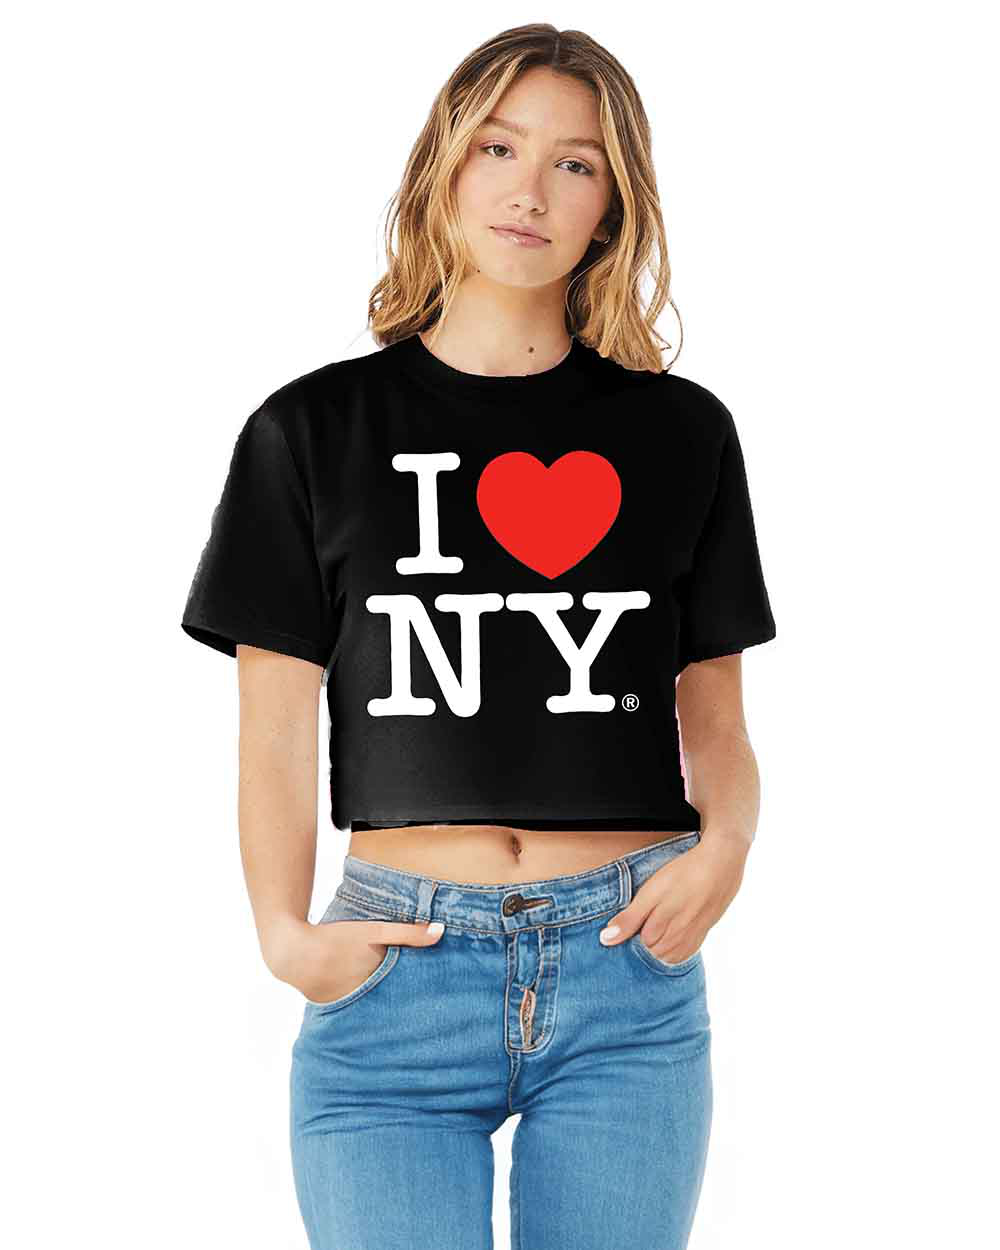 ILNY 212HA - I Love New York Adult Hoodie